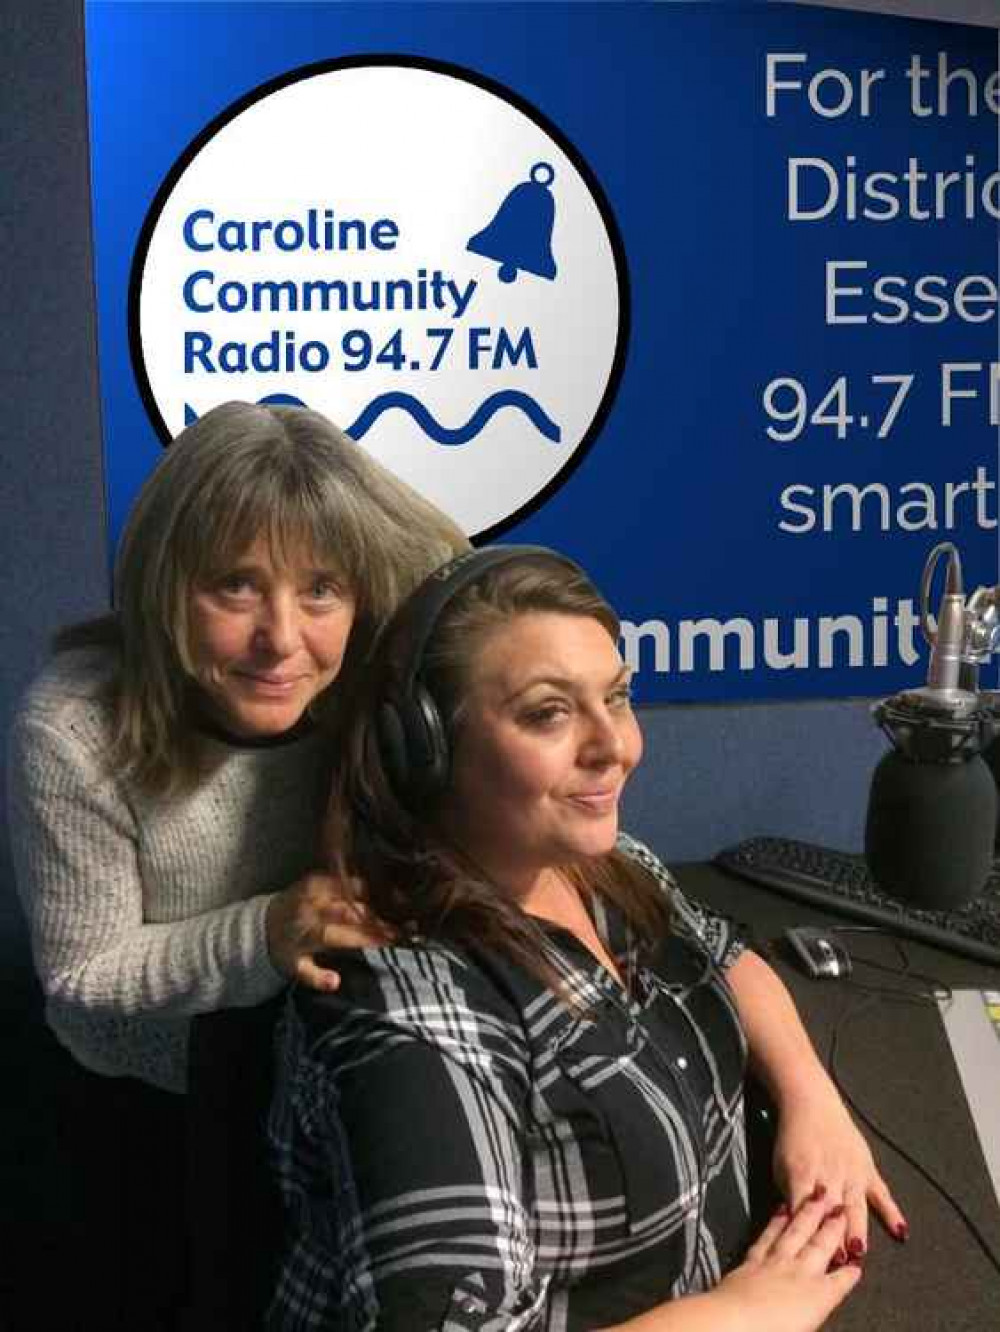 Ready to broadcast on Caroline Community Radio 94.7 FM! Friday evening presenter Laura Tuckey with her mother, rock star Suzi Quatro